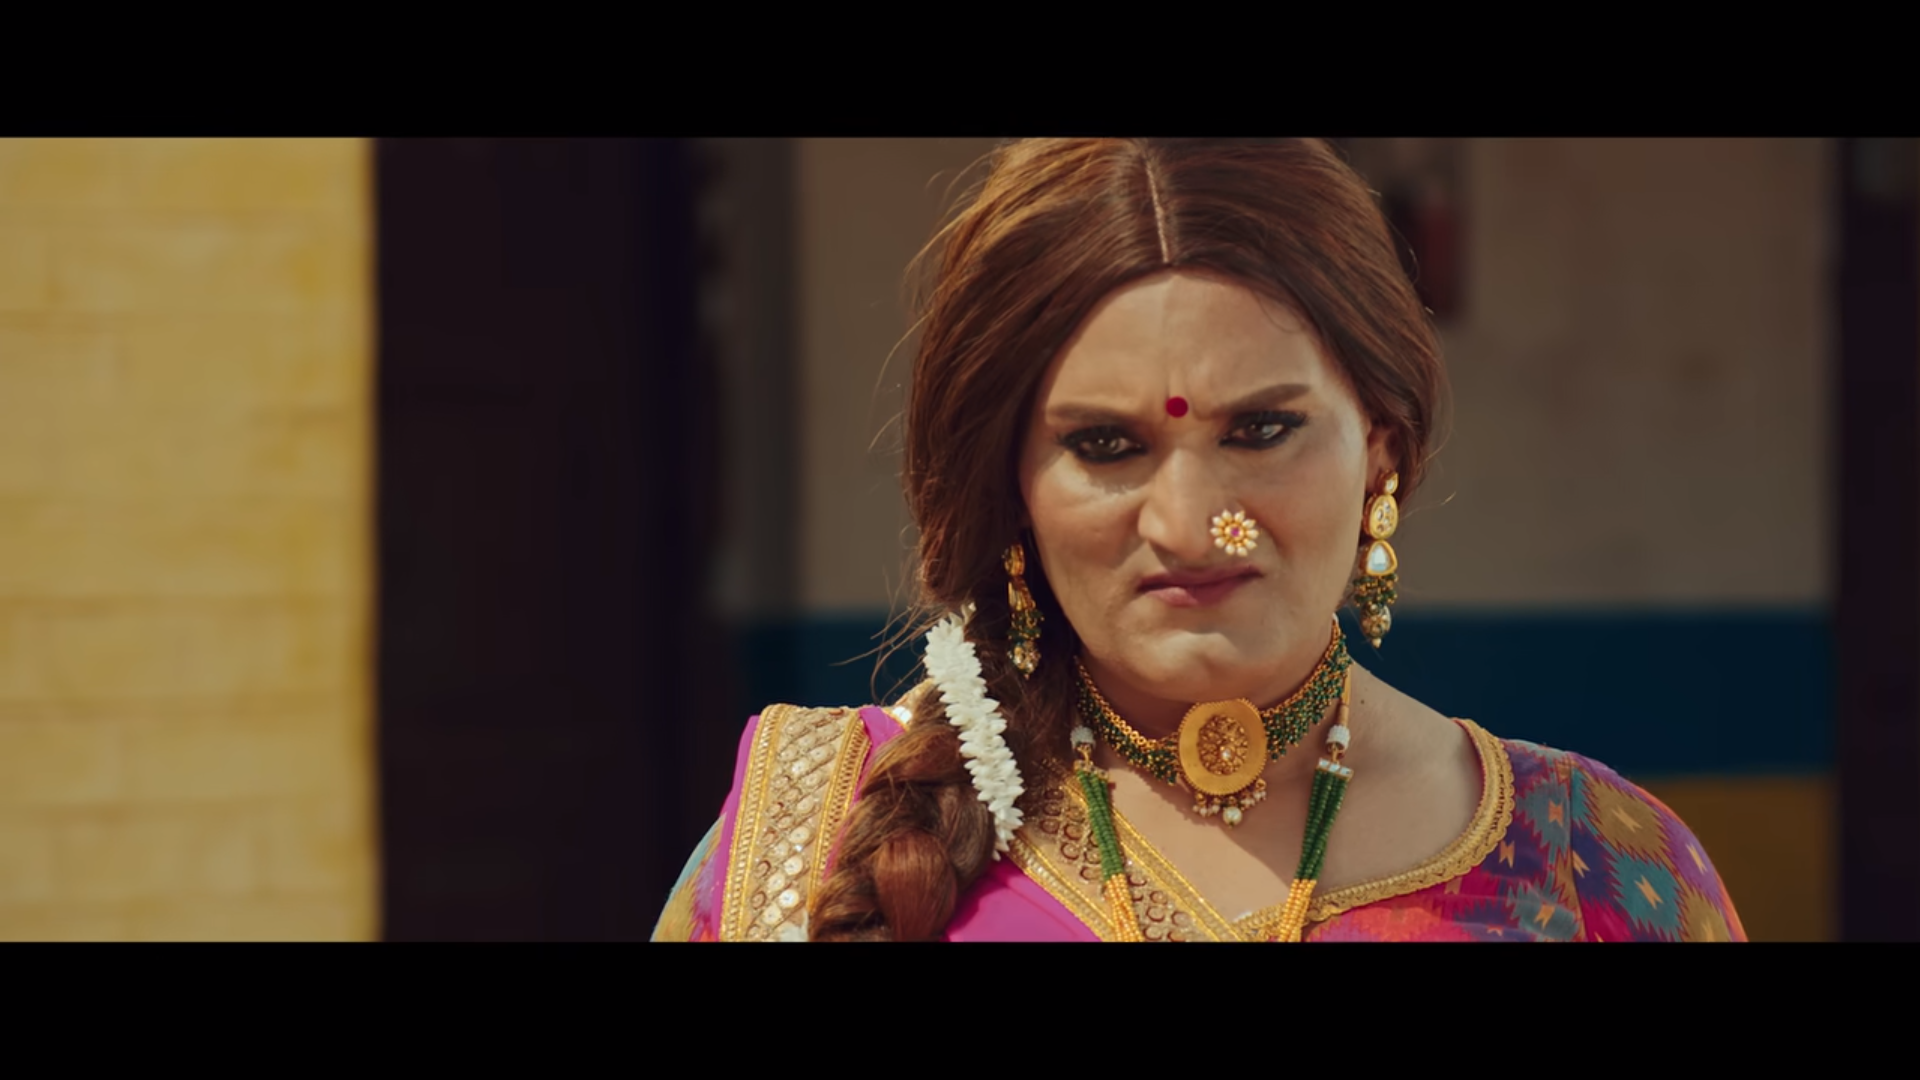 Photo: Screengrab from the trailer of Ek Bhagavad Gita